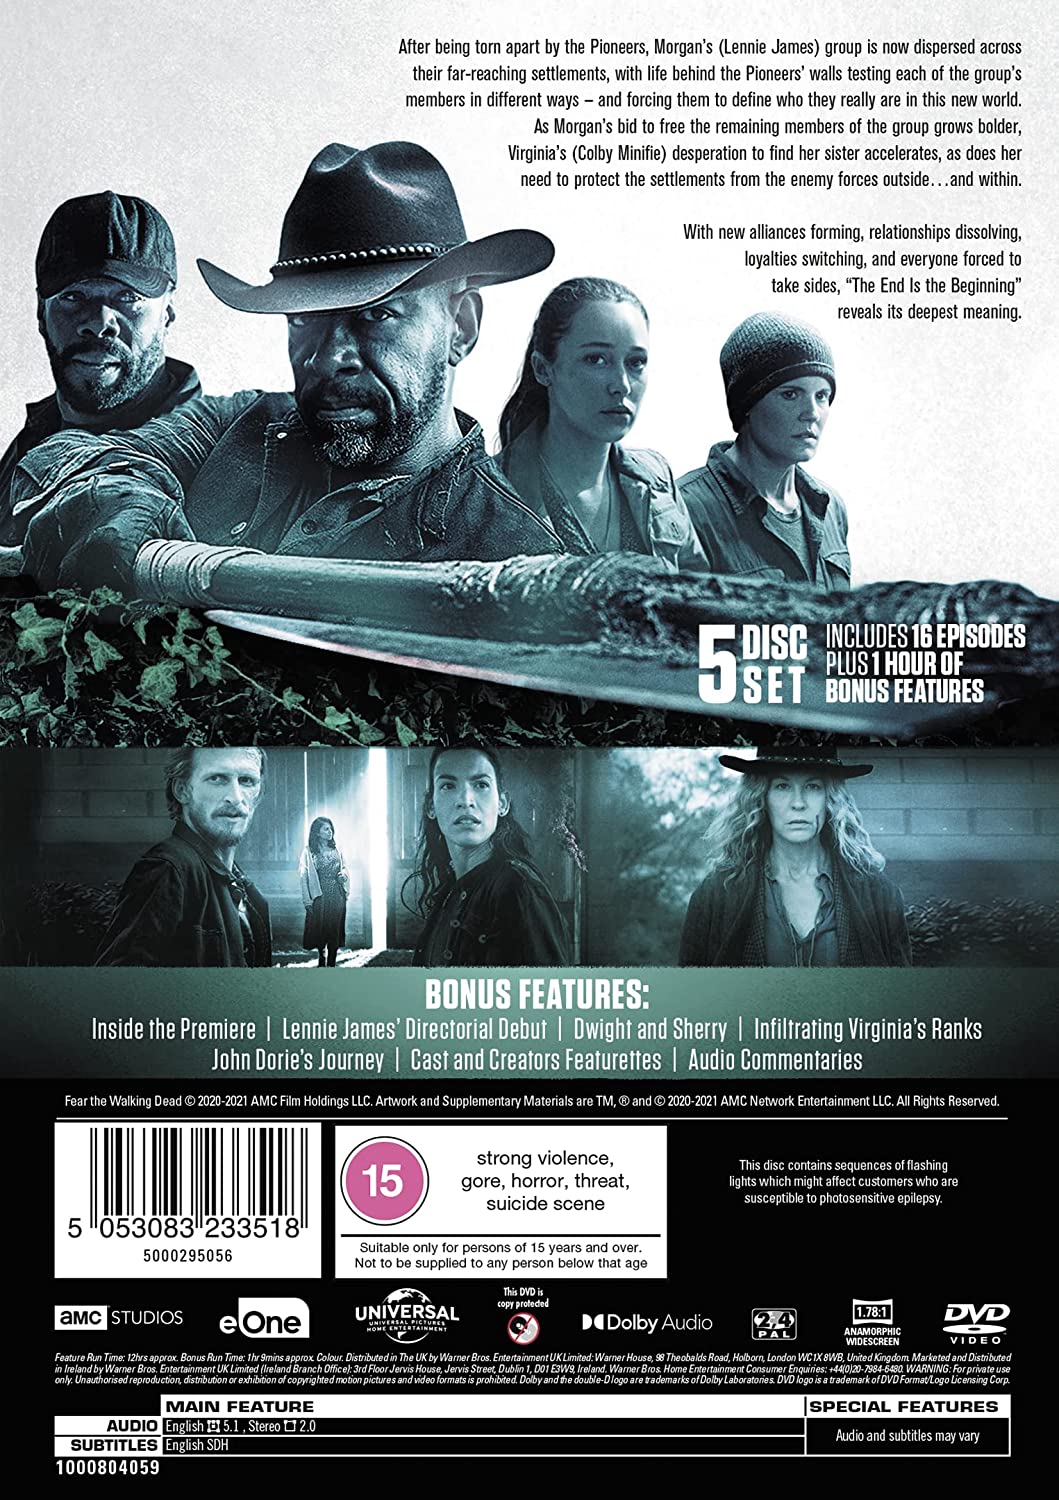 Fear The Walking Dead The Complete Sixth Season -Drama  [2020] [DVD]